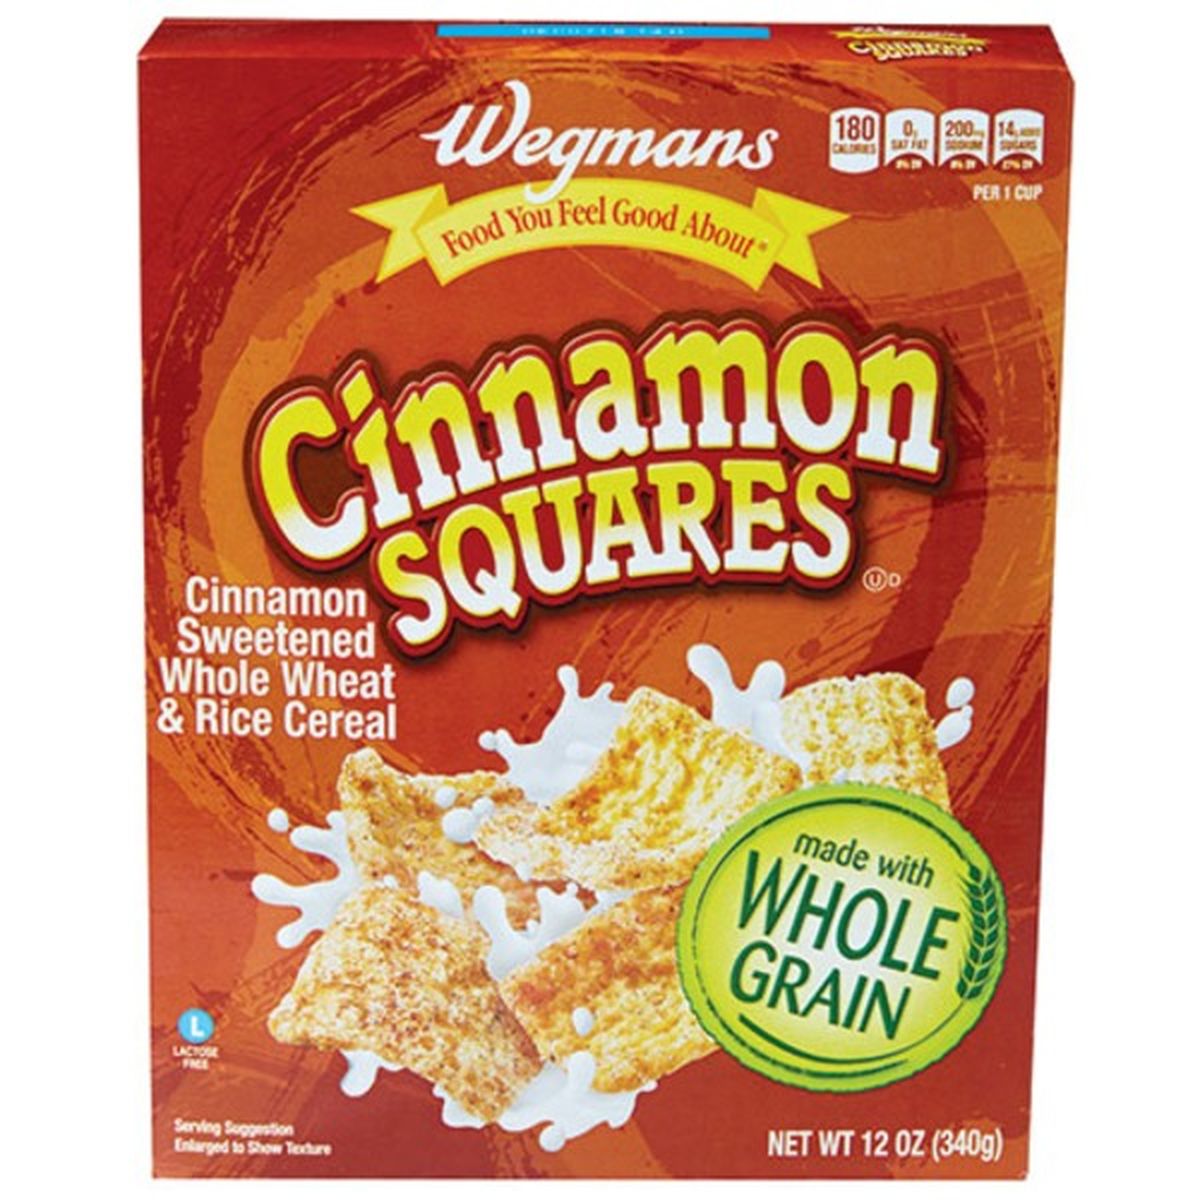 Calories in Wegmans Cinnamon Squares Cereal